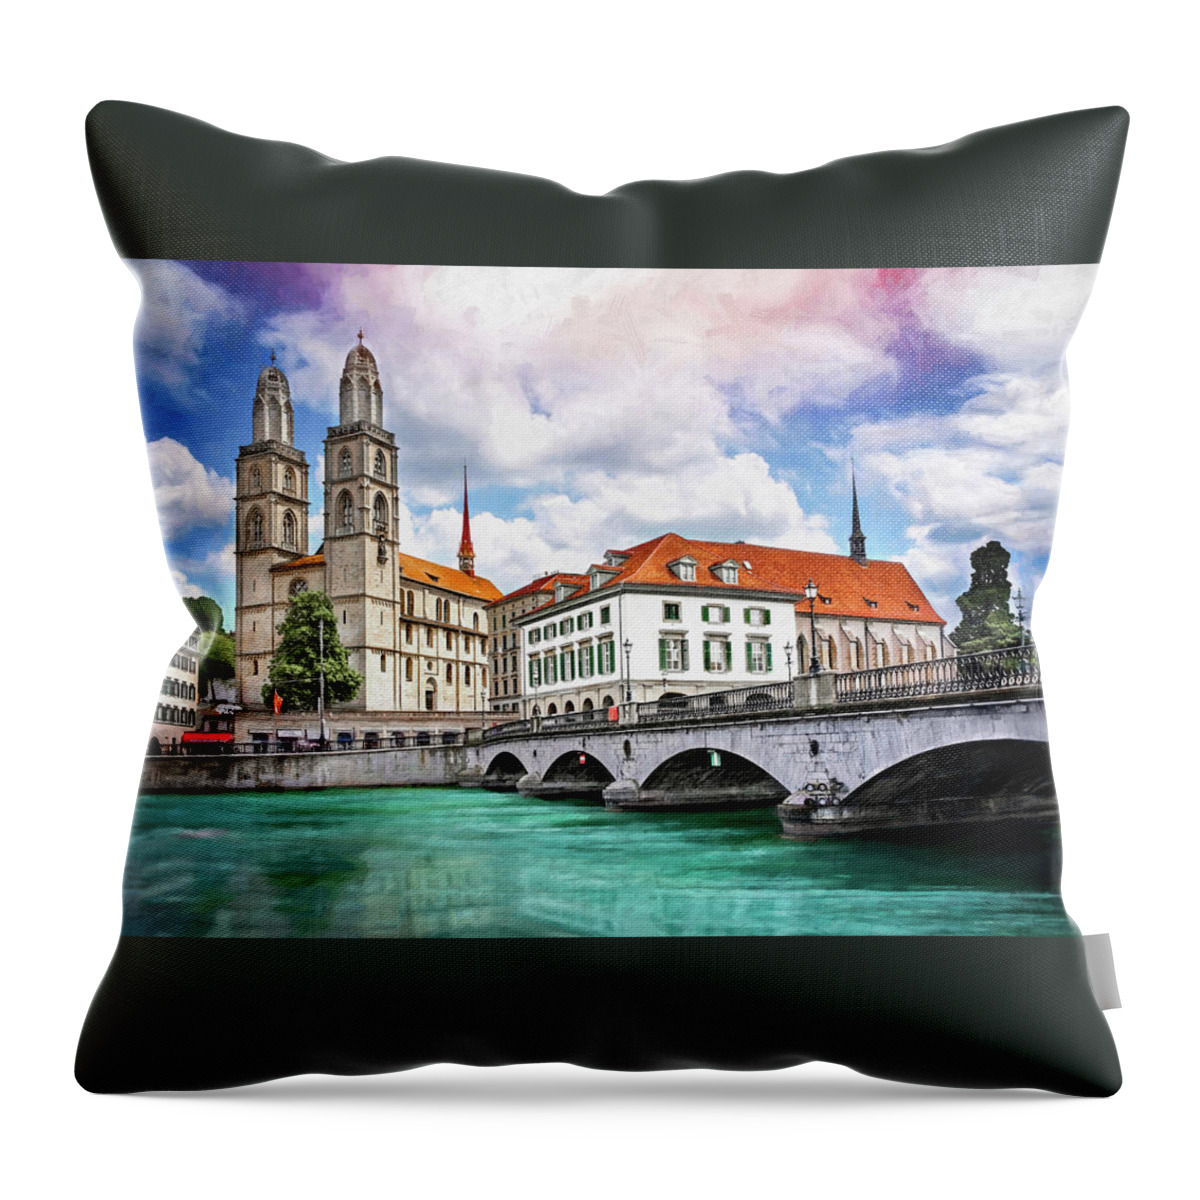 Zurich Throw Pillow featuring the photograph Zurich Old Town by Carol Japp